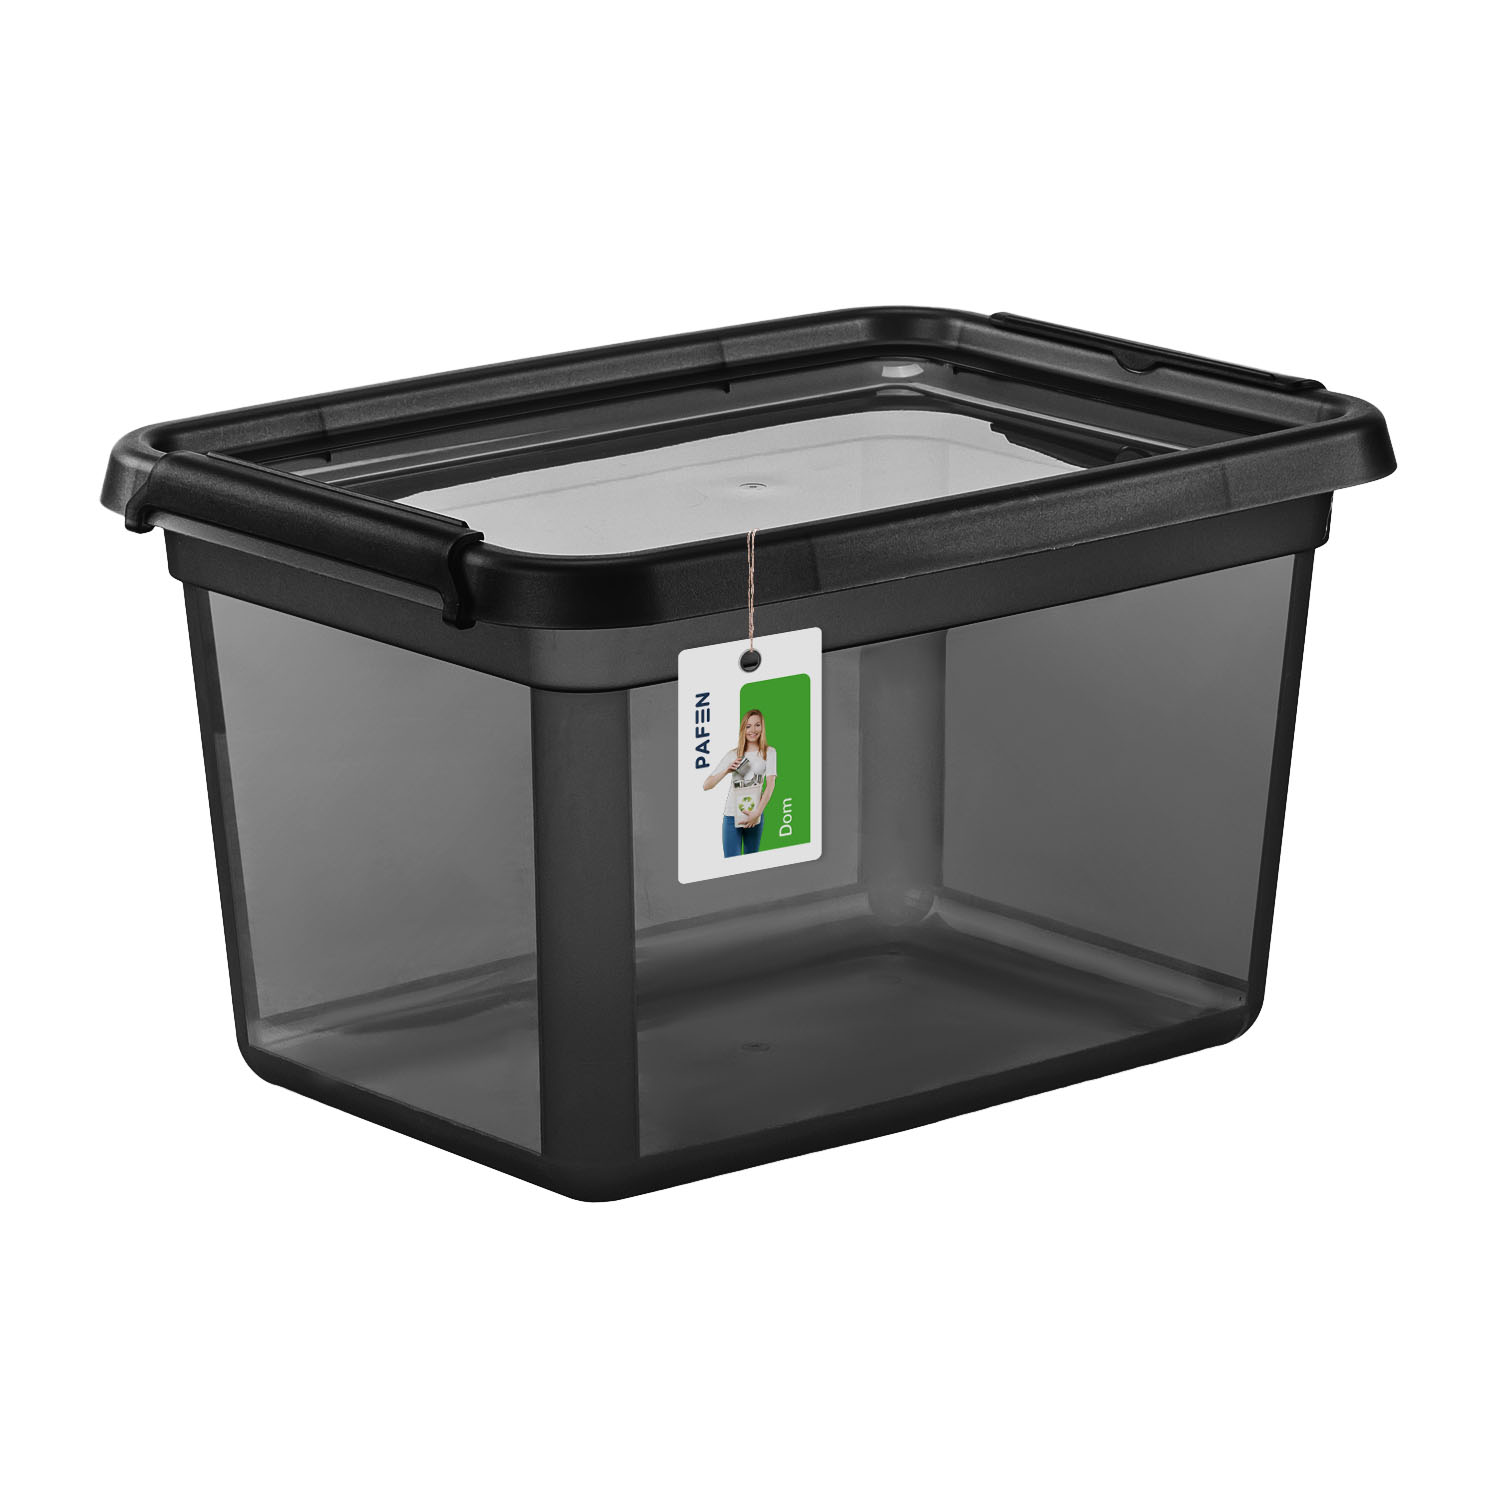 BaseStore Color 2552 Transparent black storage container